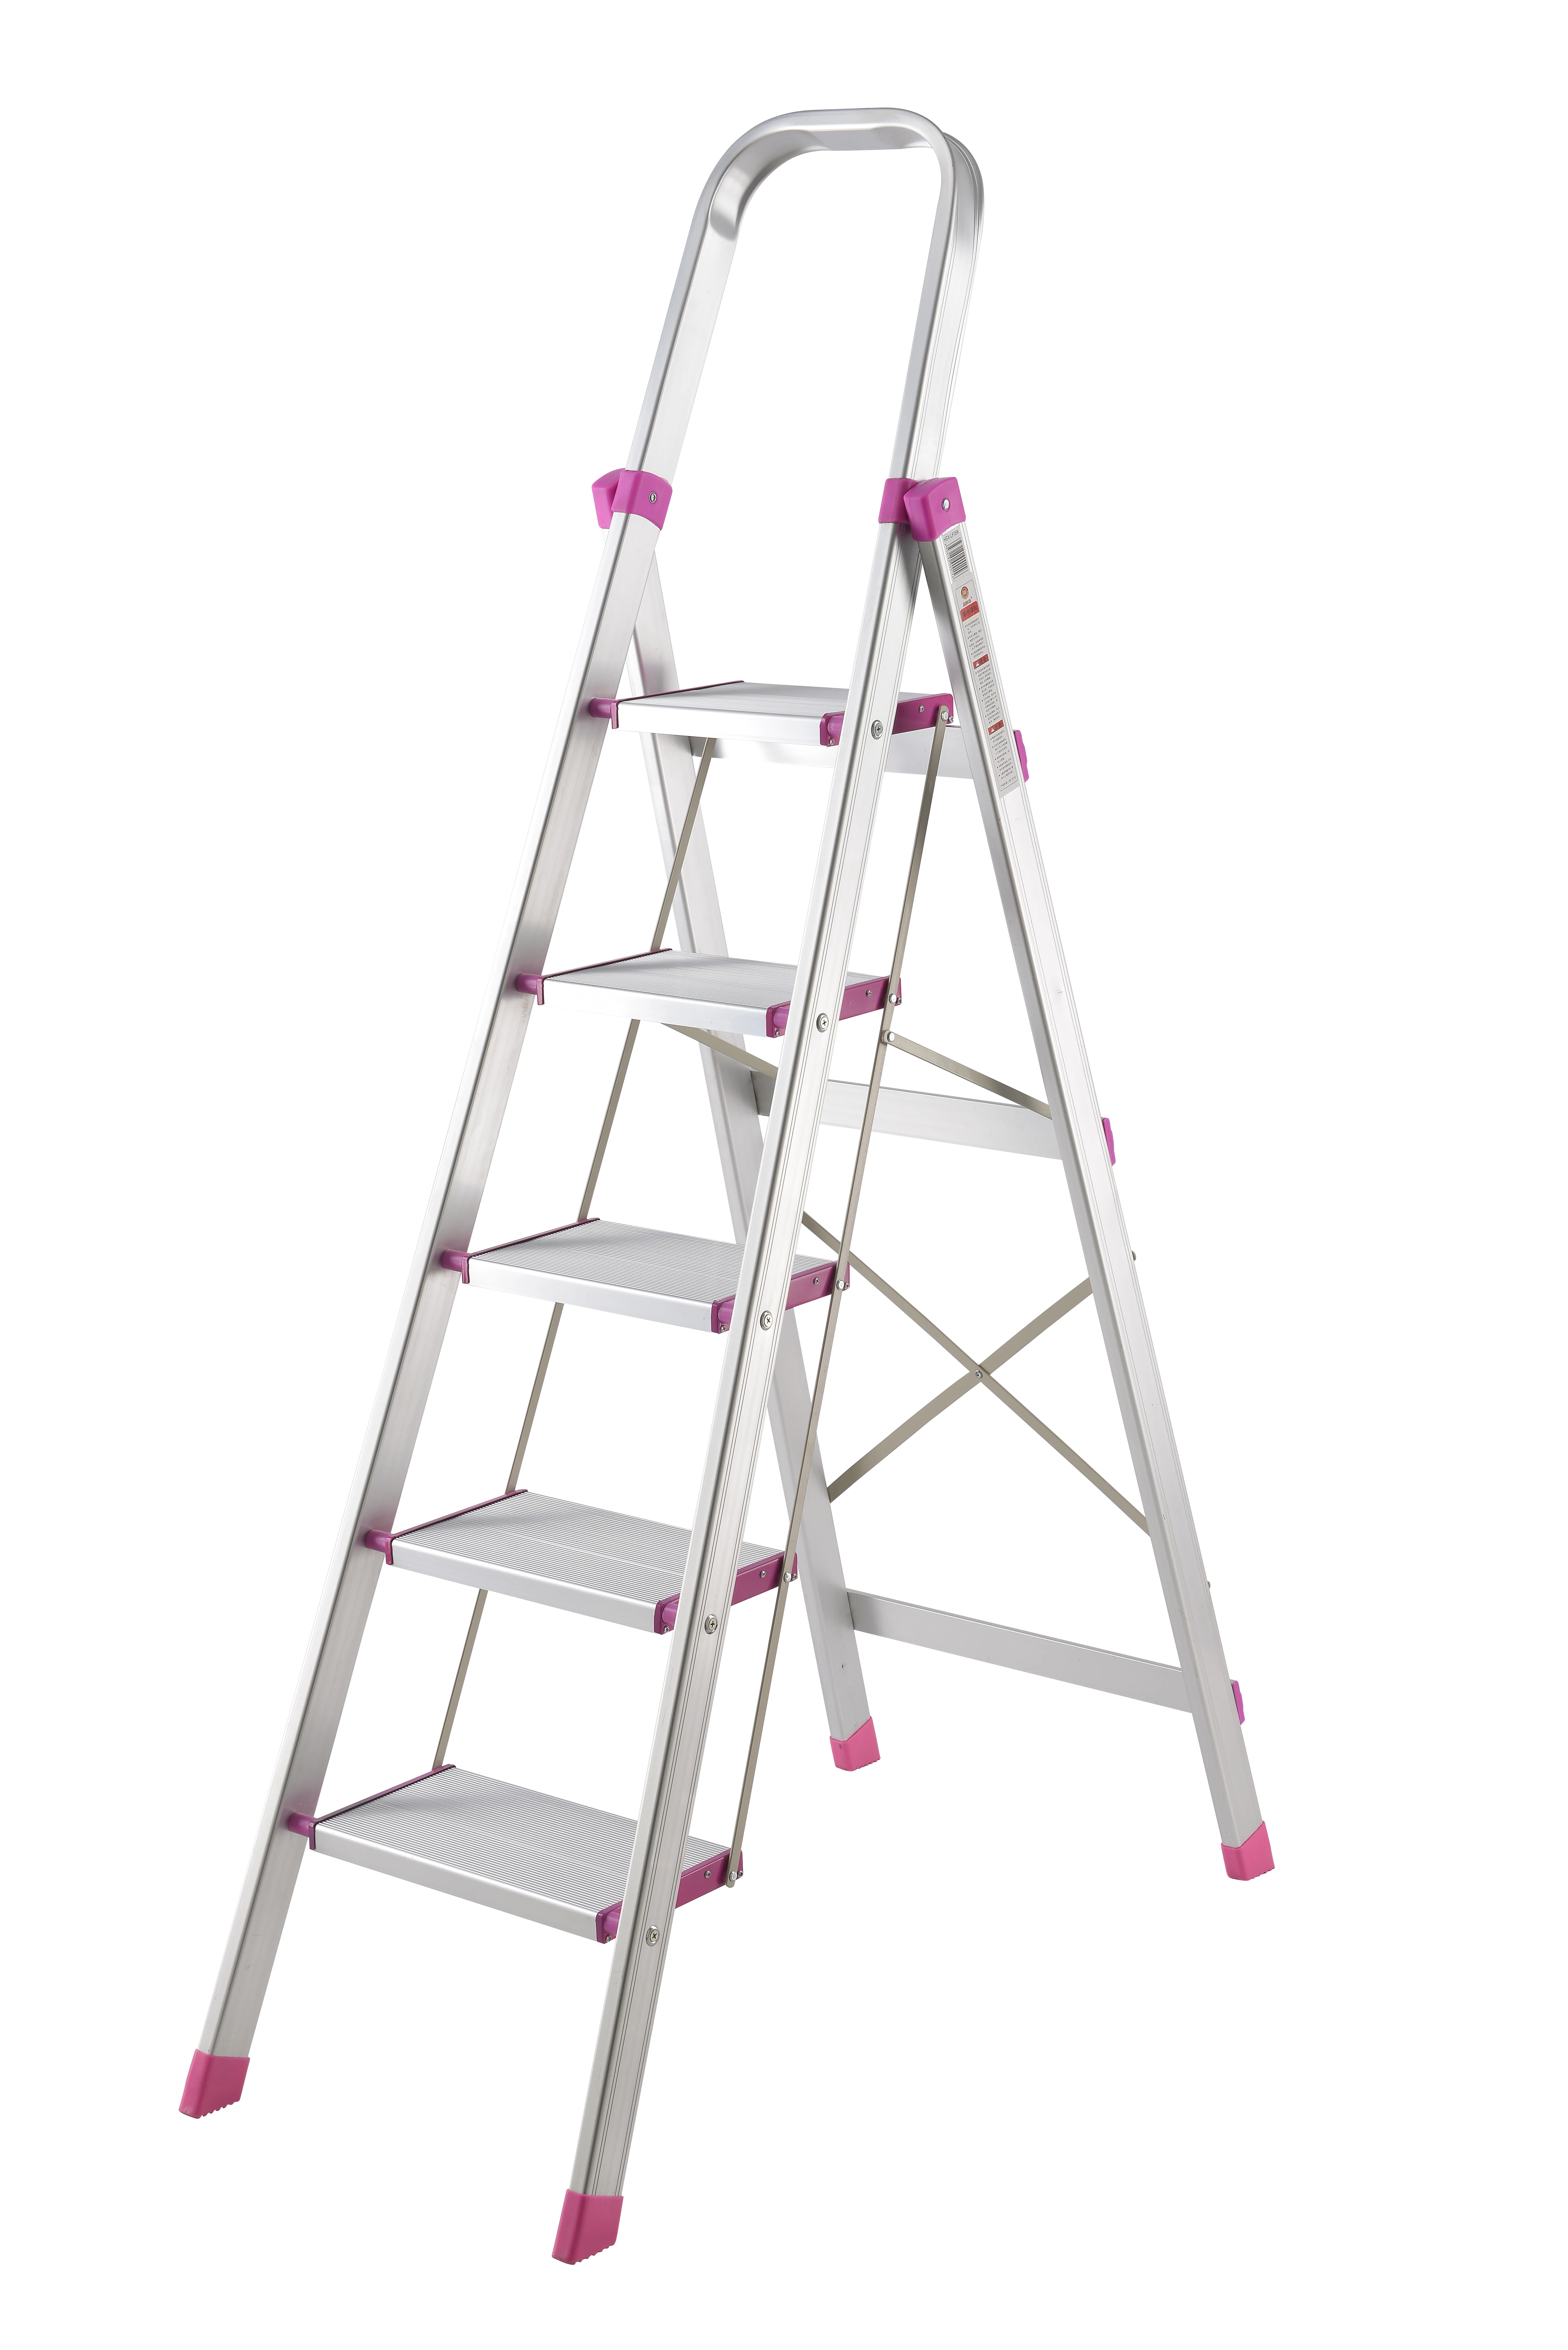 
6 steps aluminum ladders 